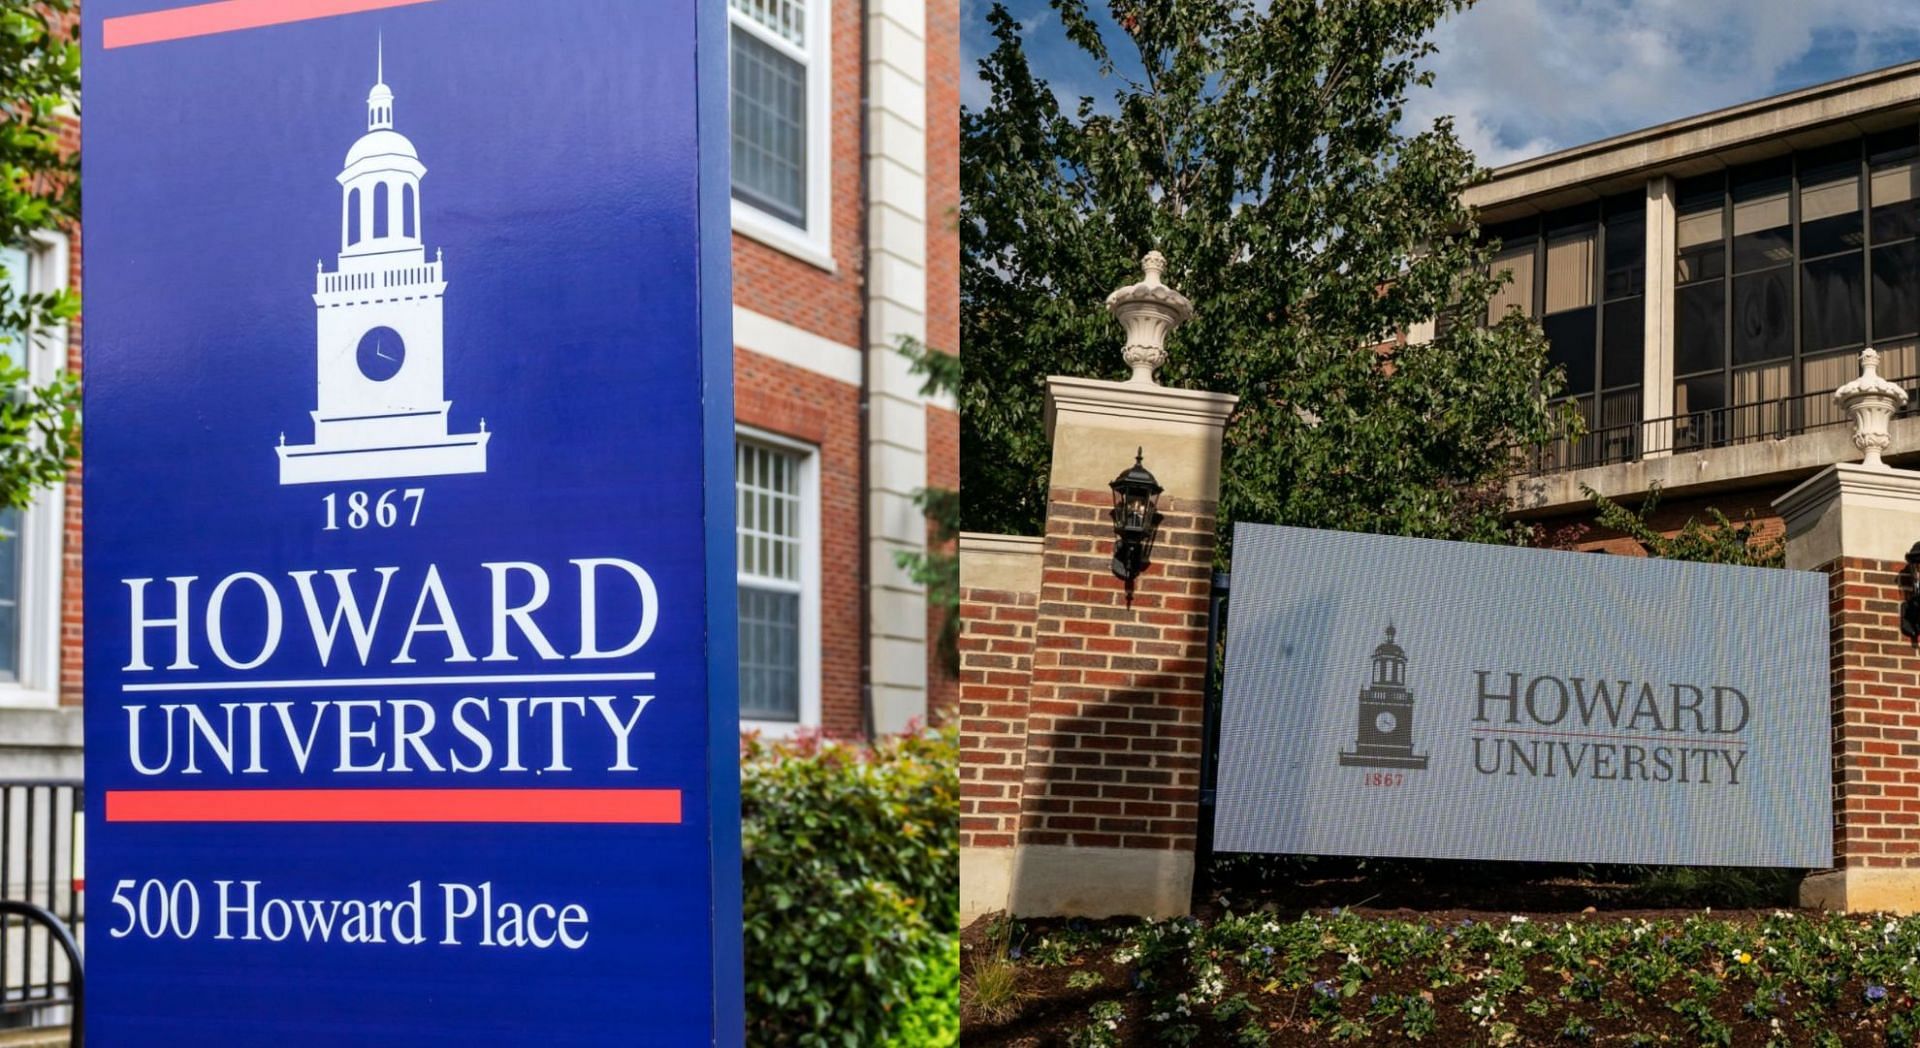 Caucasian student Michael Newman filed racial discrimination lawsuit against Howard University (Image via Getty Images)